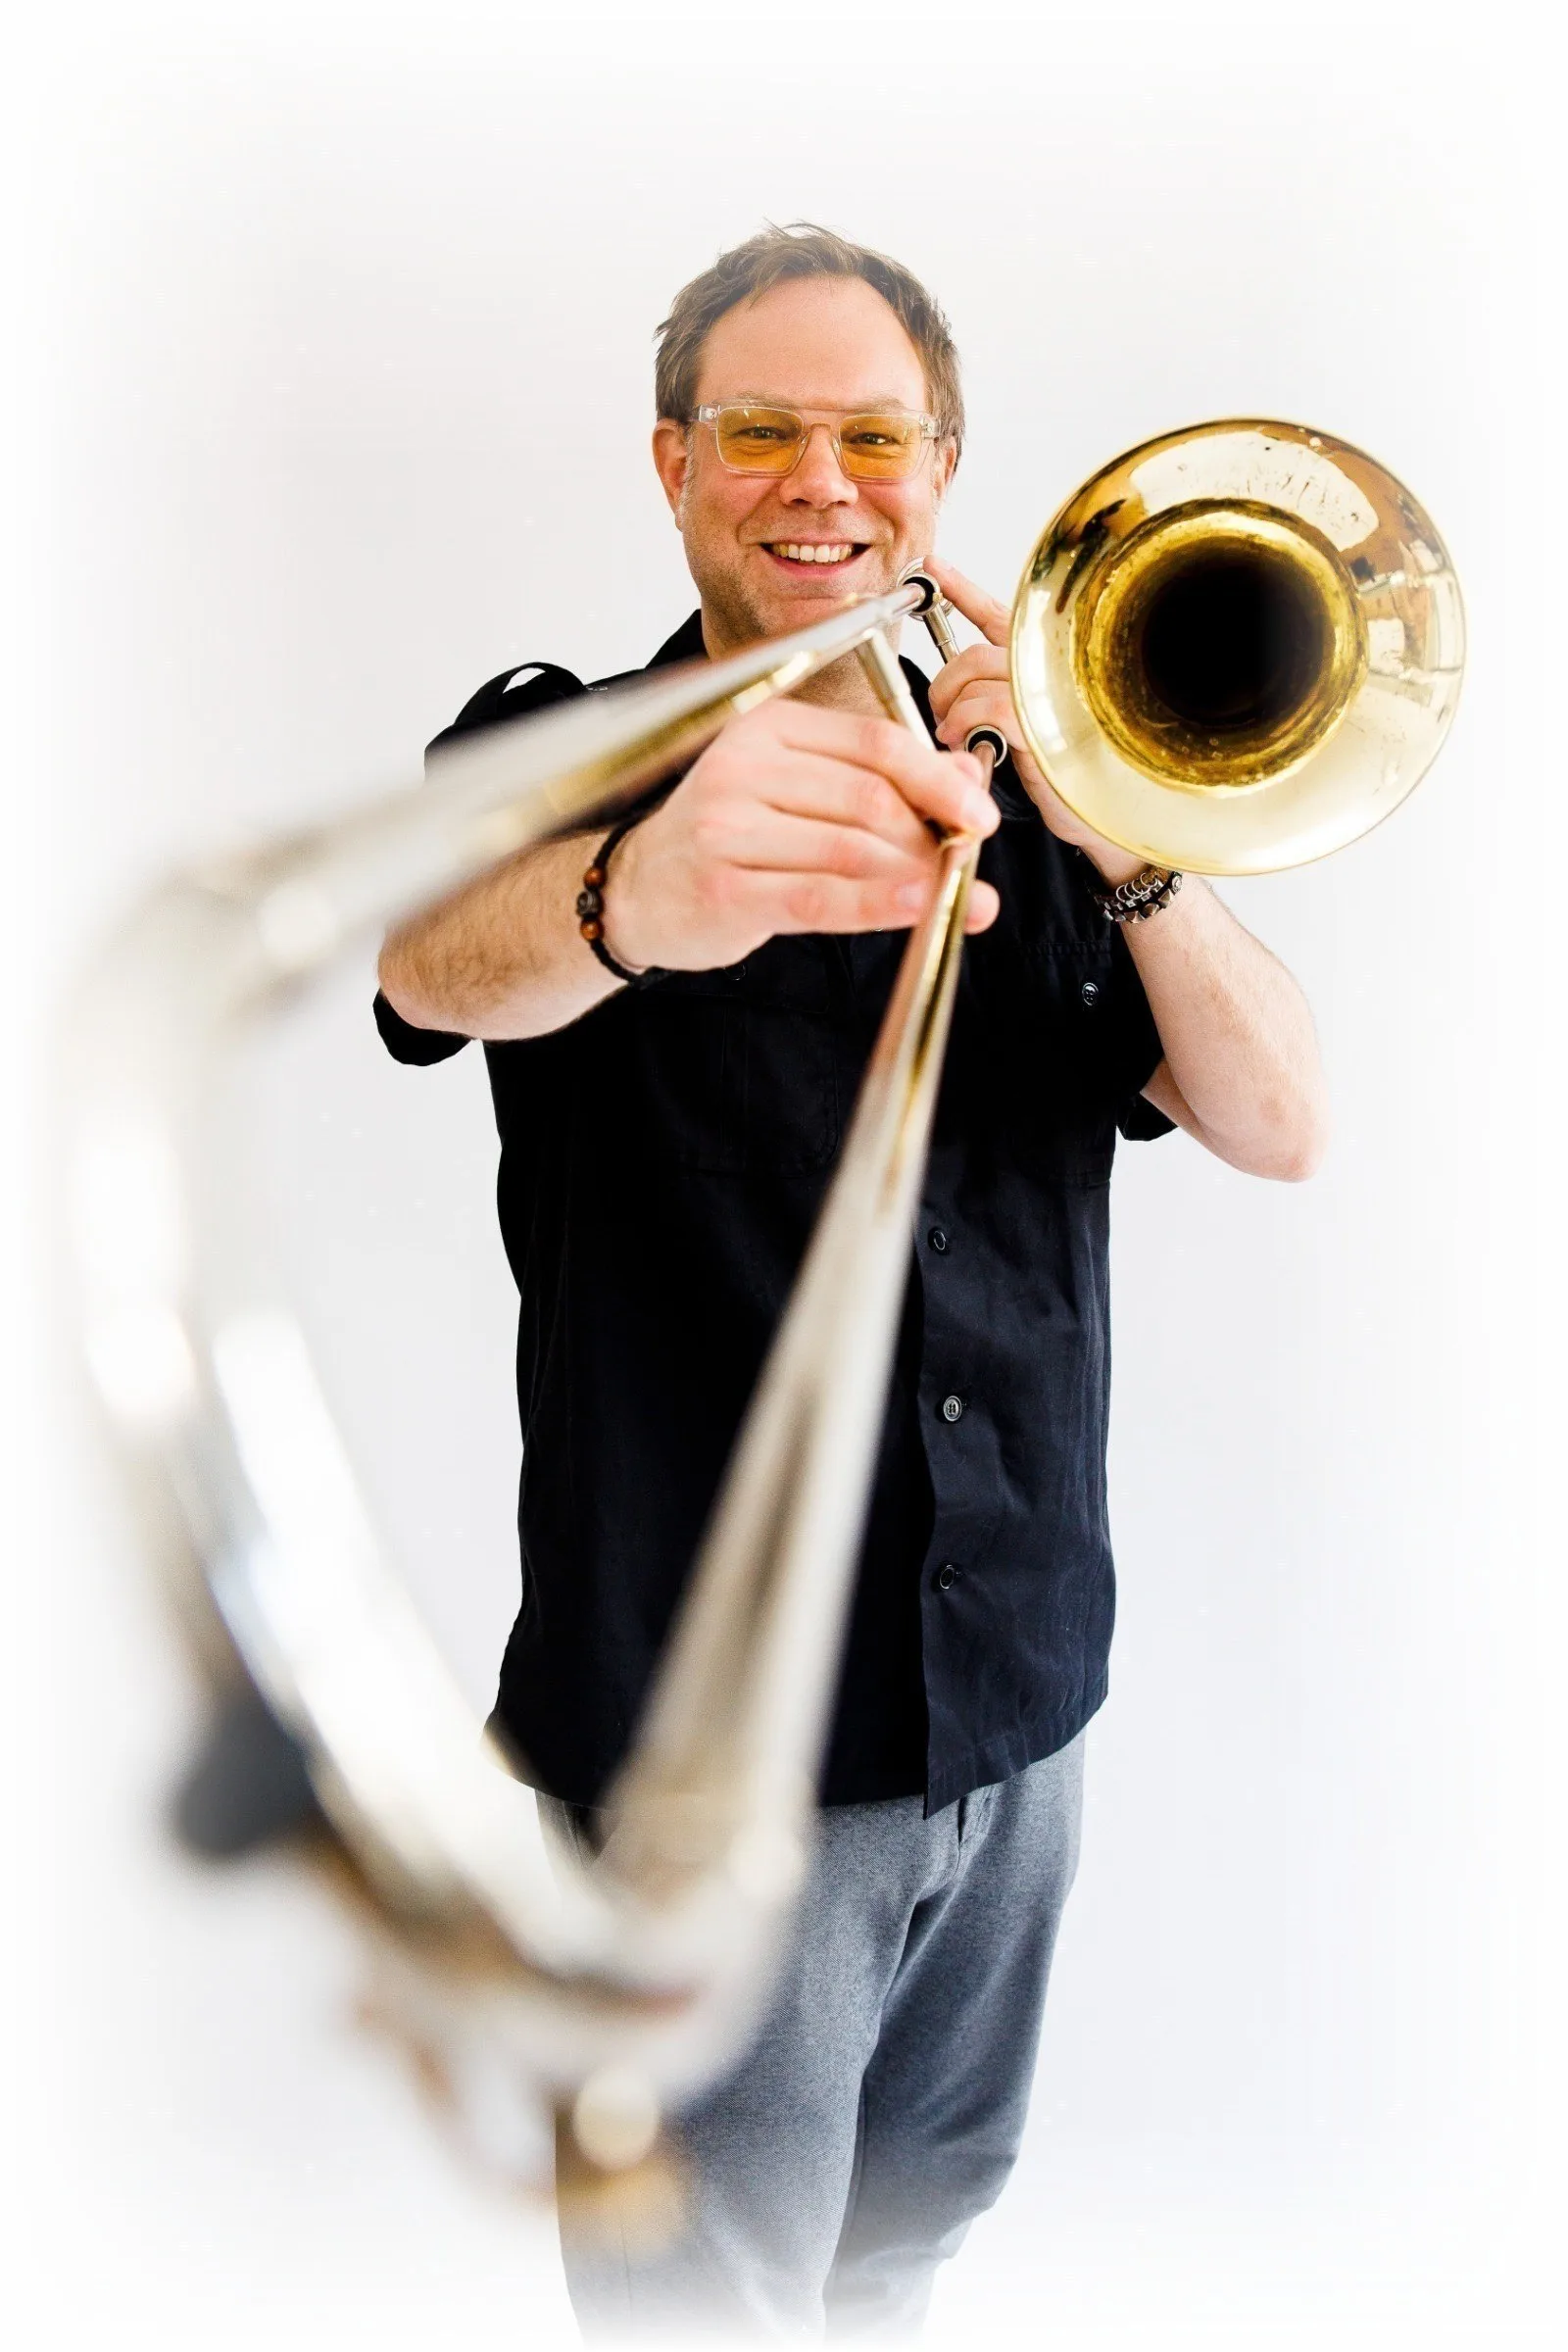 Anders Larson pro trombone player and founder of digitaltrombone.com